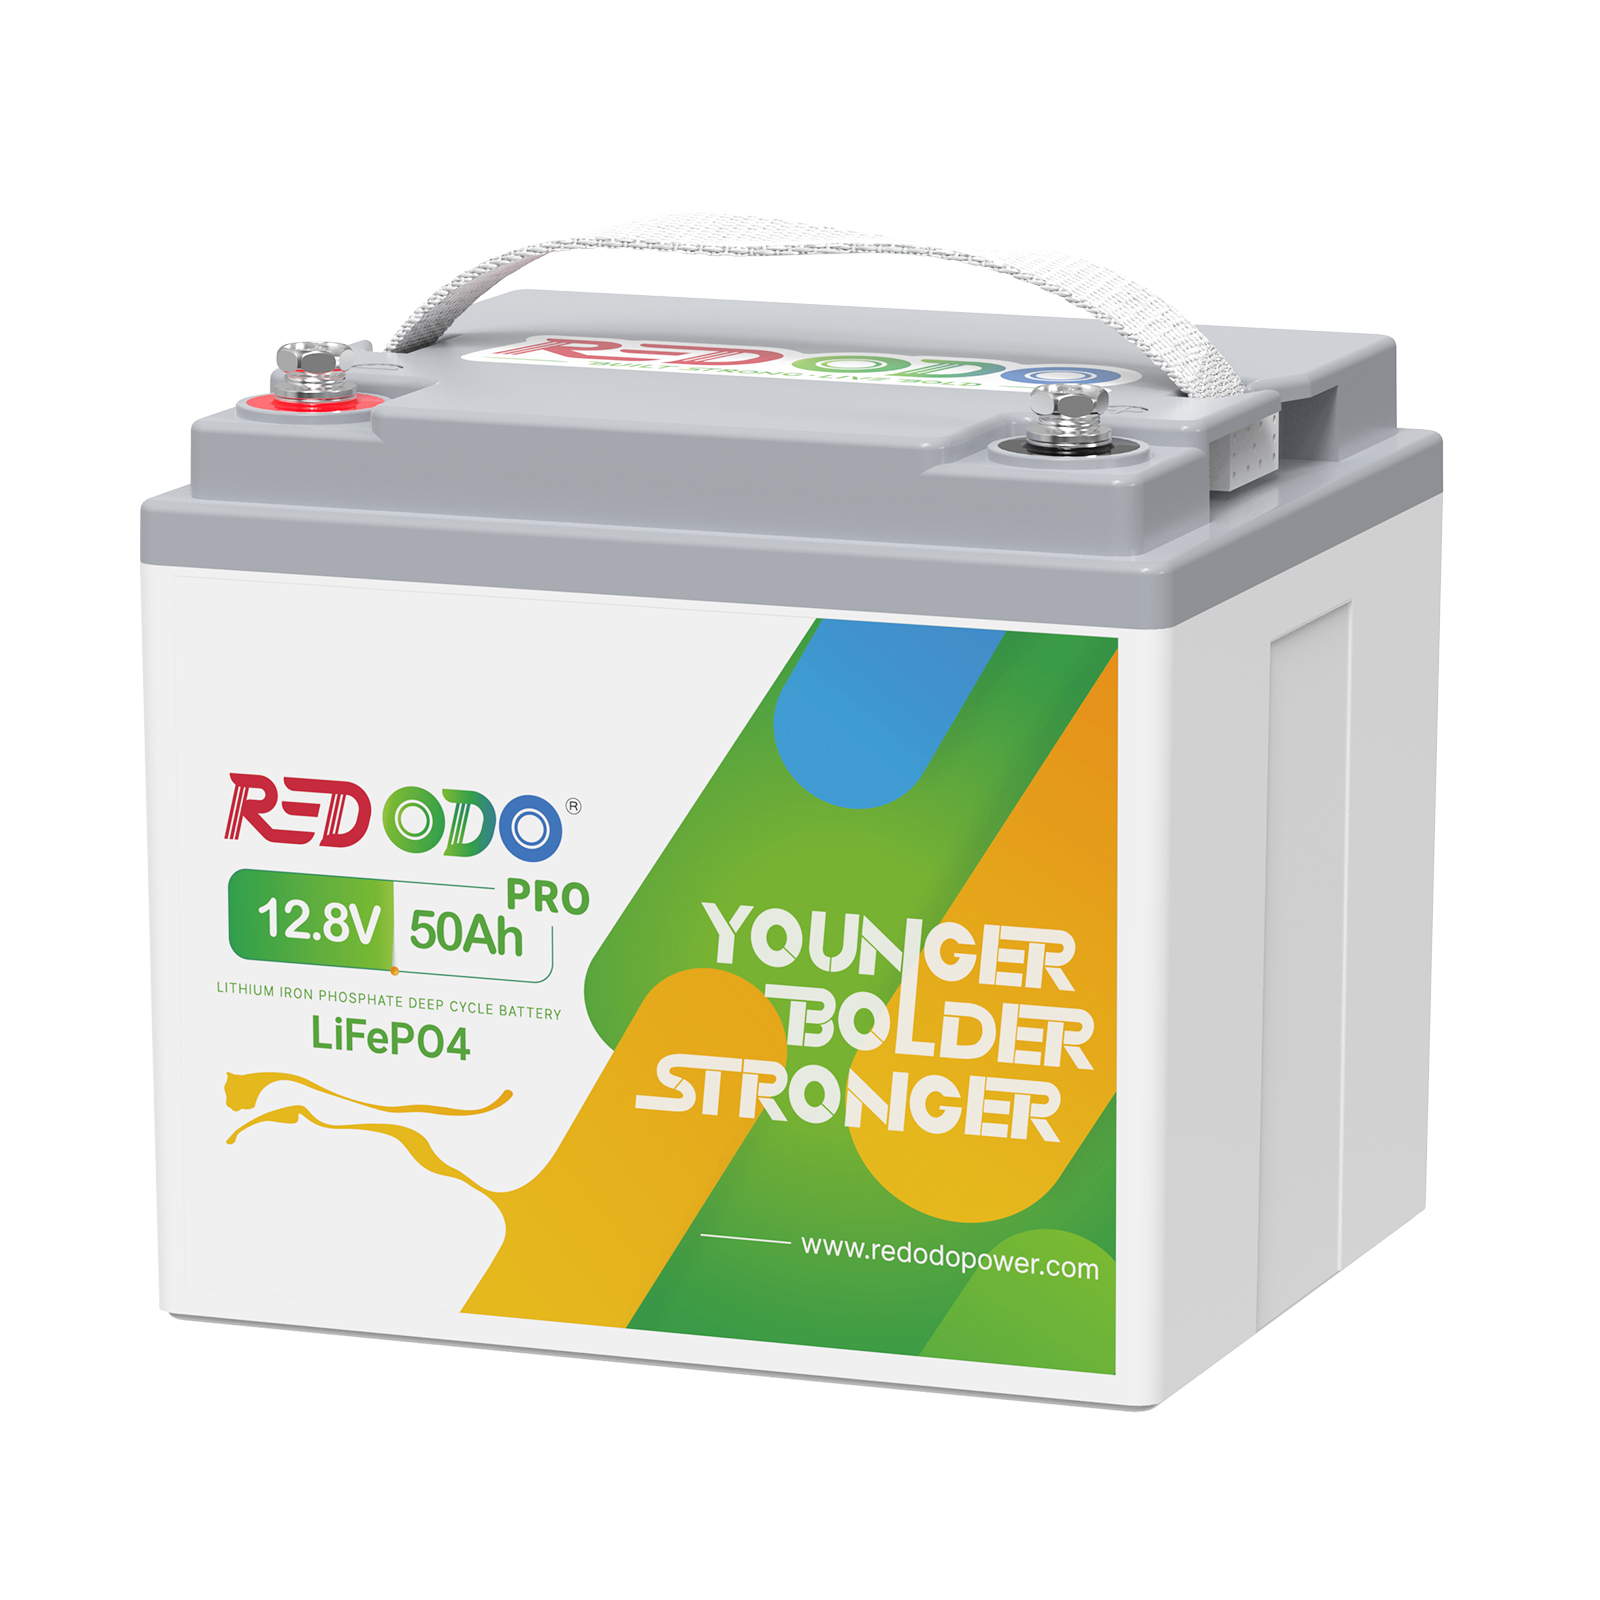 Redodo 12V 50Ah pro LiFePO4 Battery | 640Wh & 640W